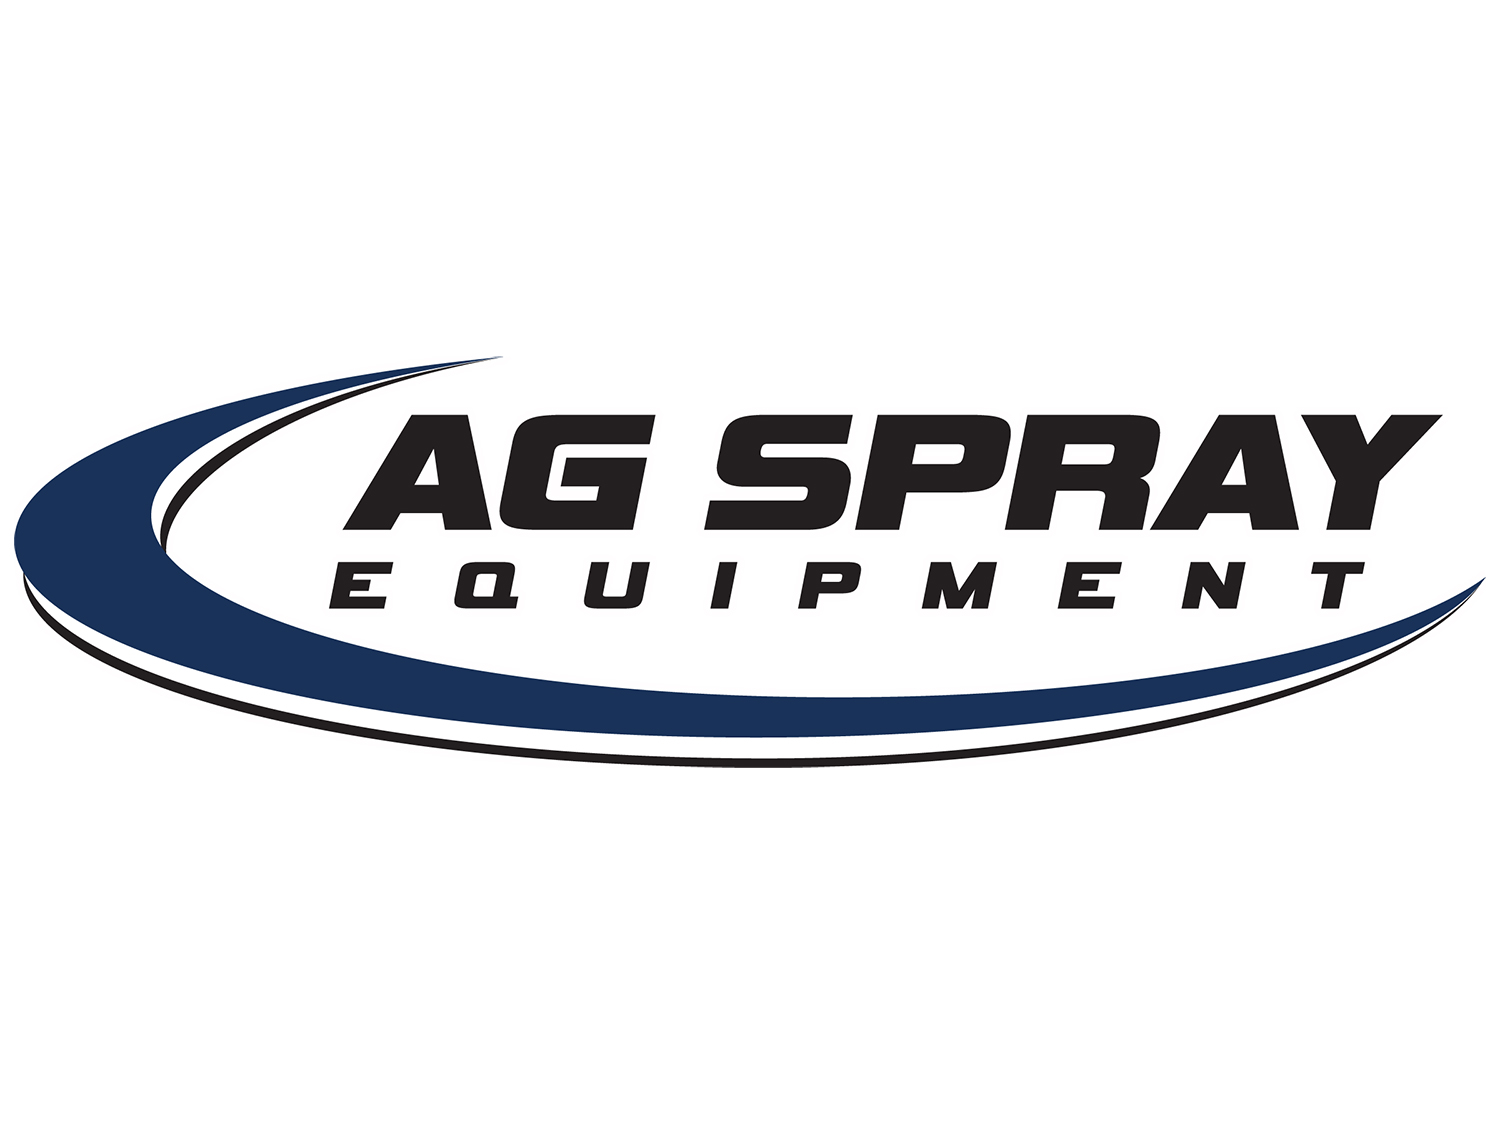 Ag Spray Equipment